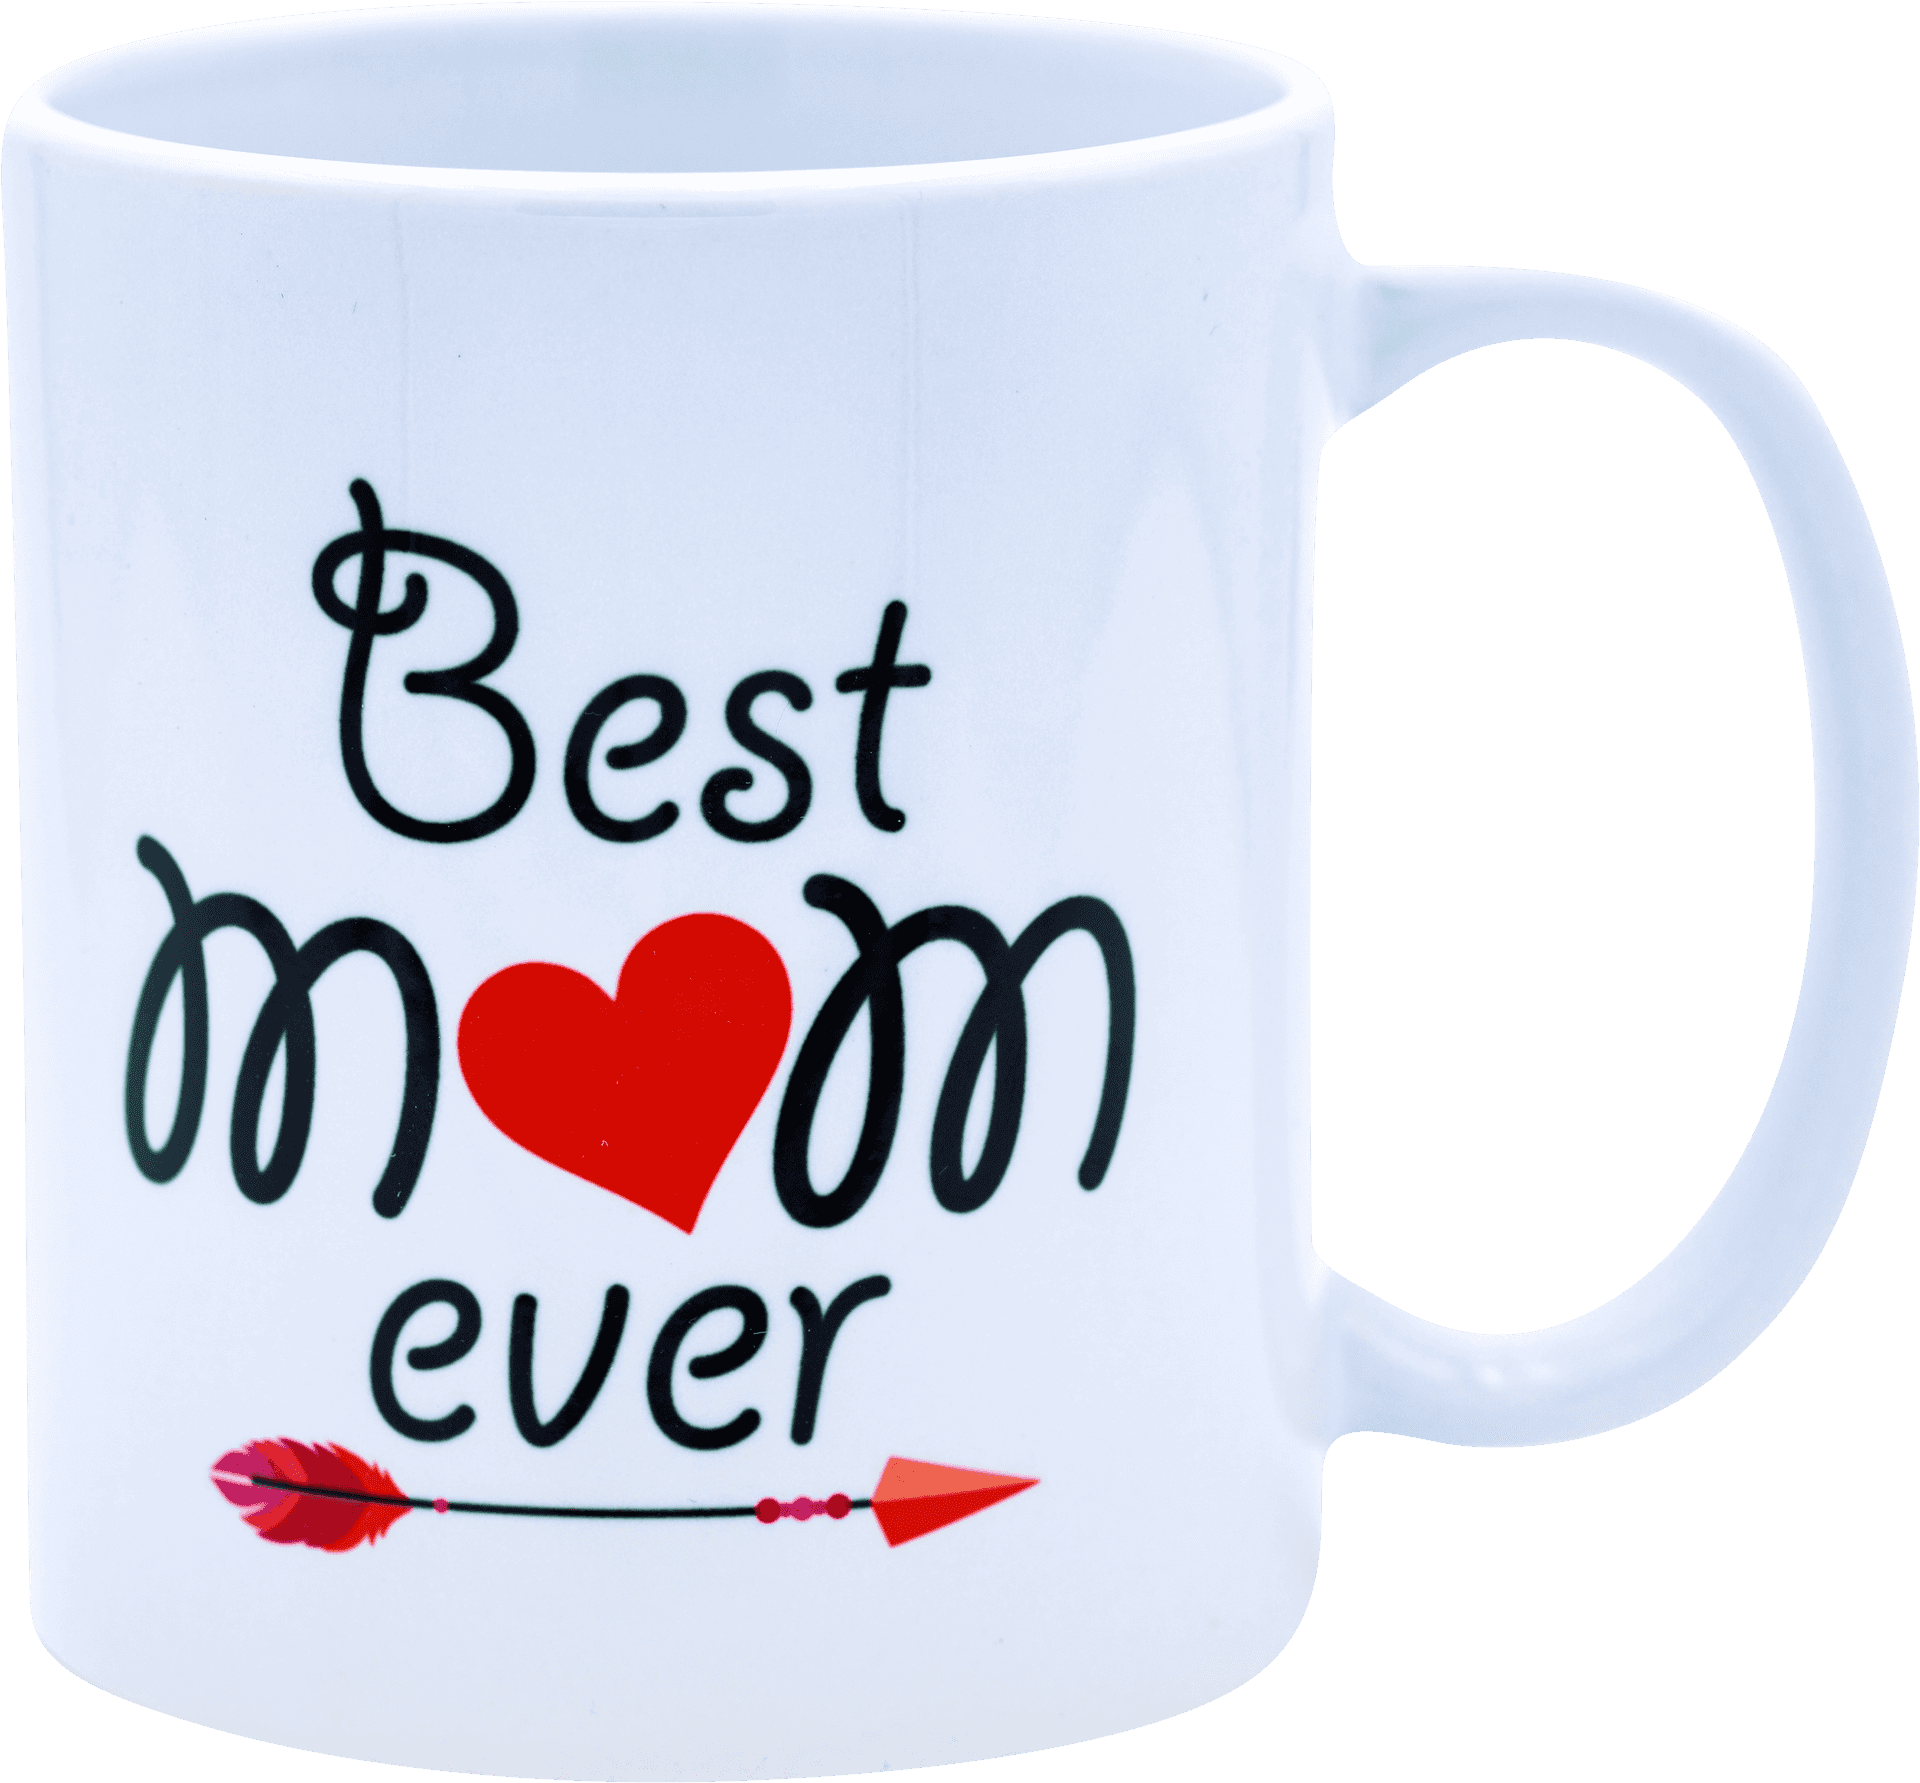 Best Mom Ever Coffee Mug PNG